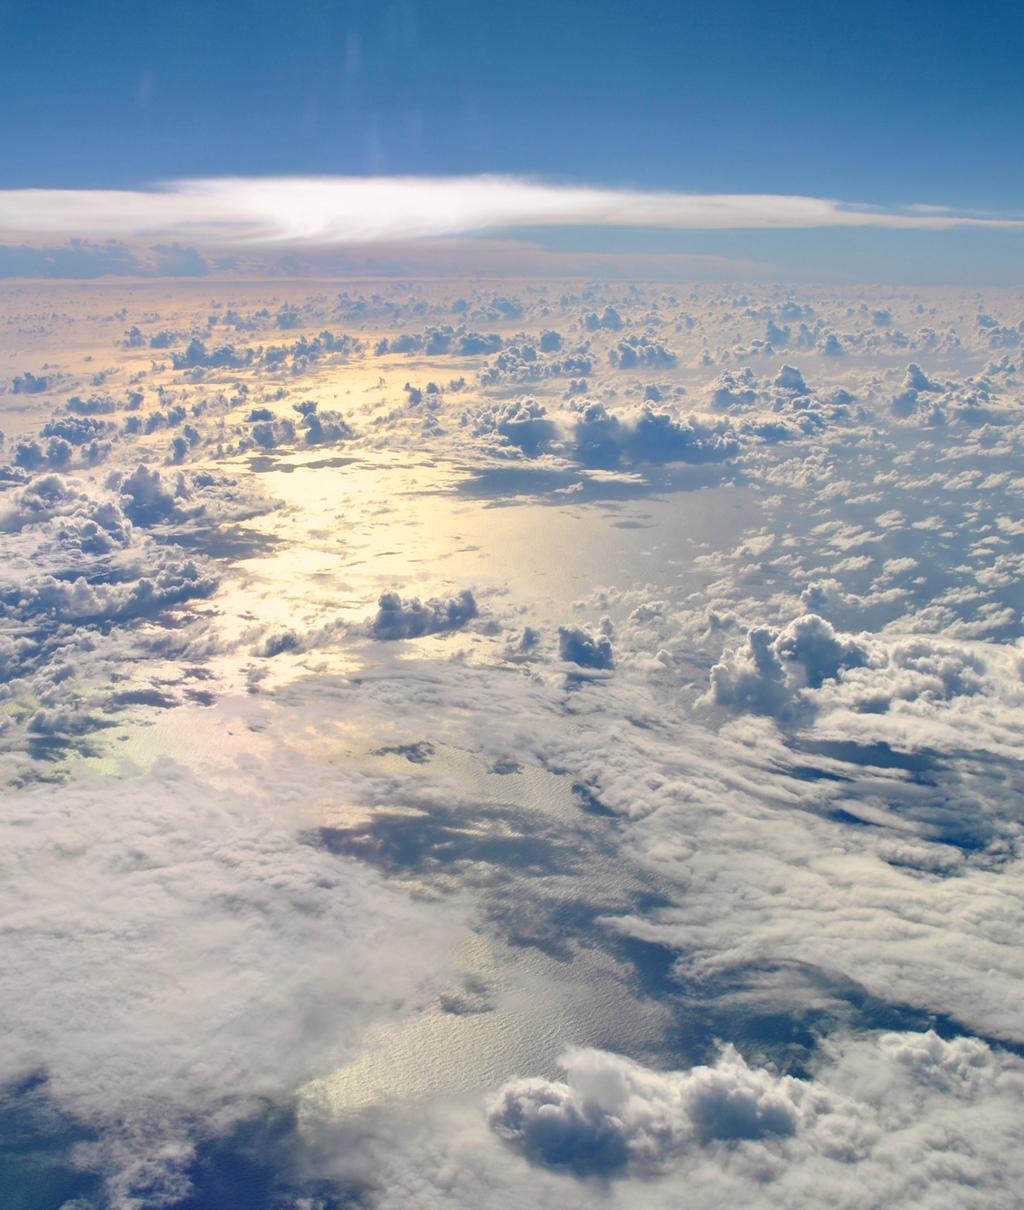 Do climate models over-estimate cloud feedbacks?